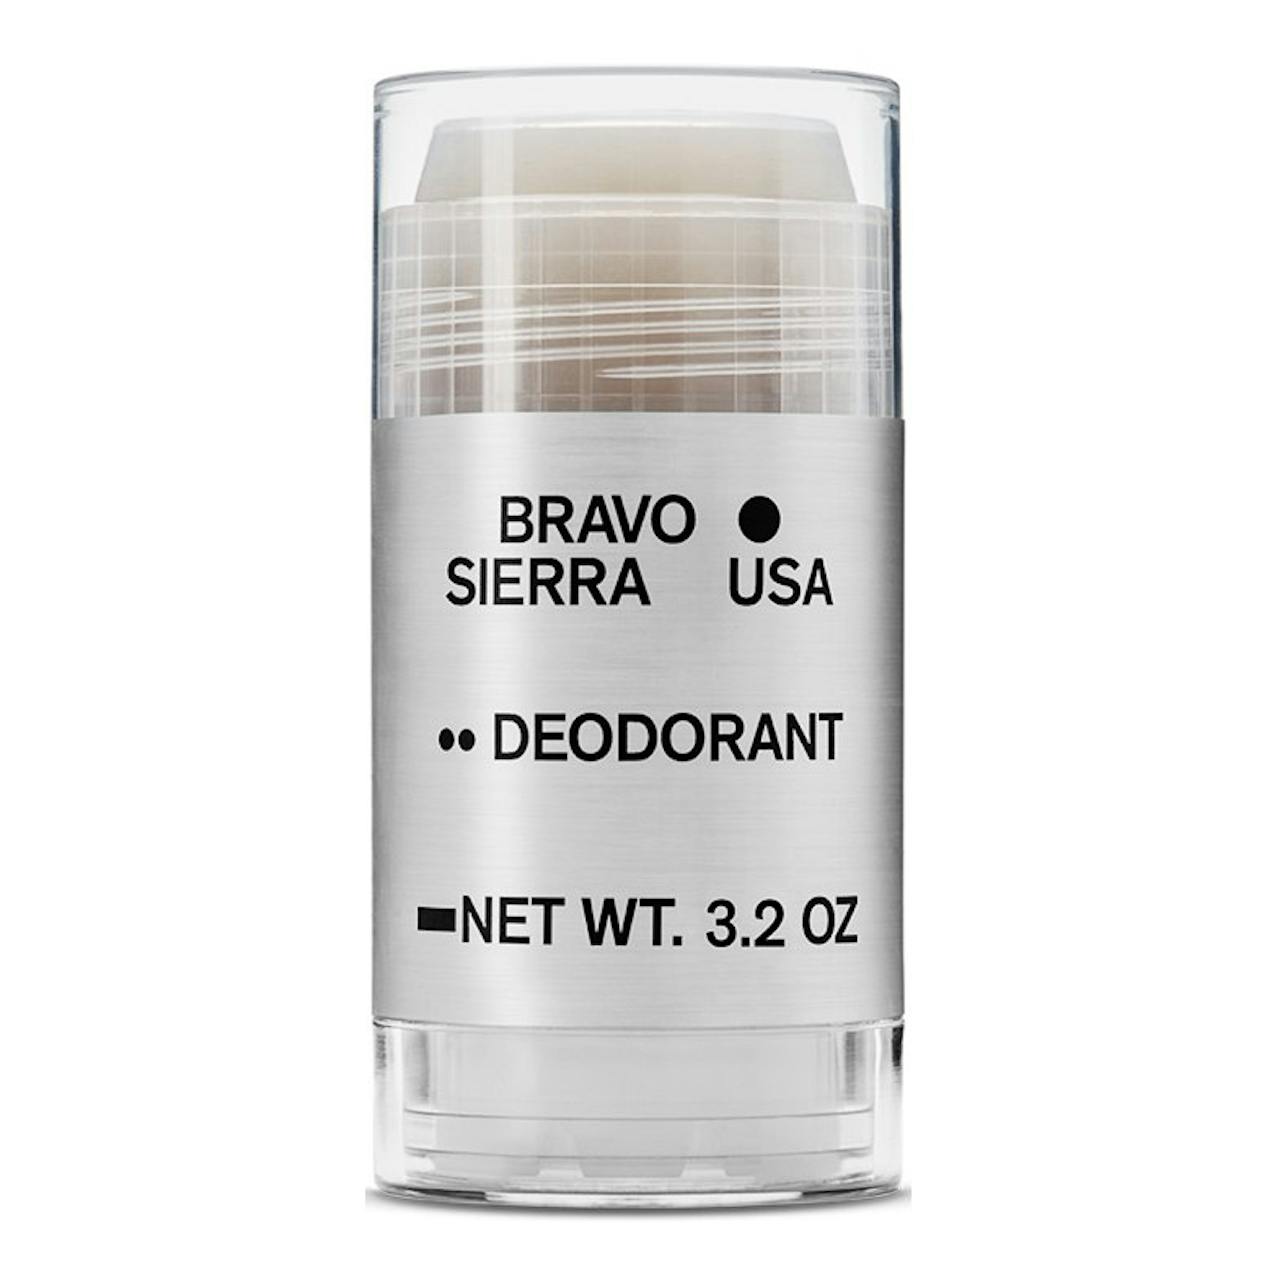 Bravo Sierra Deodorant